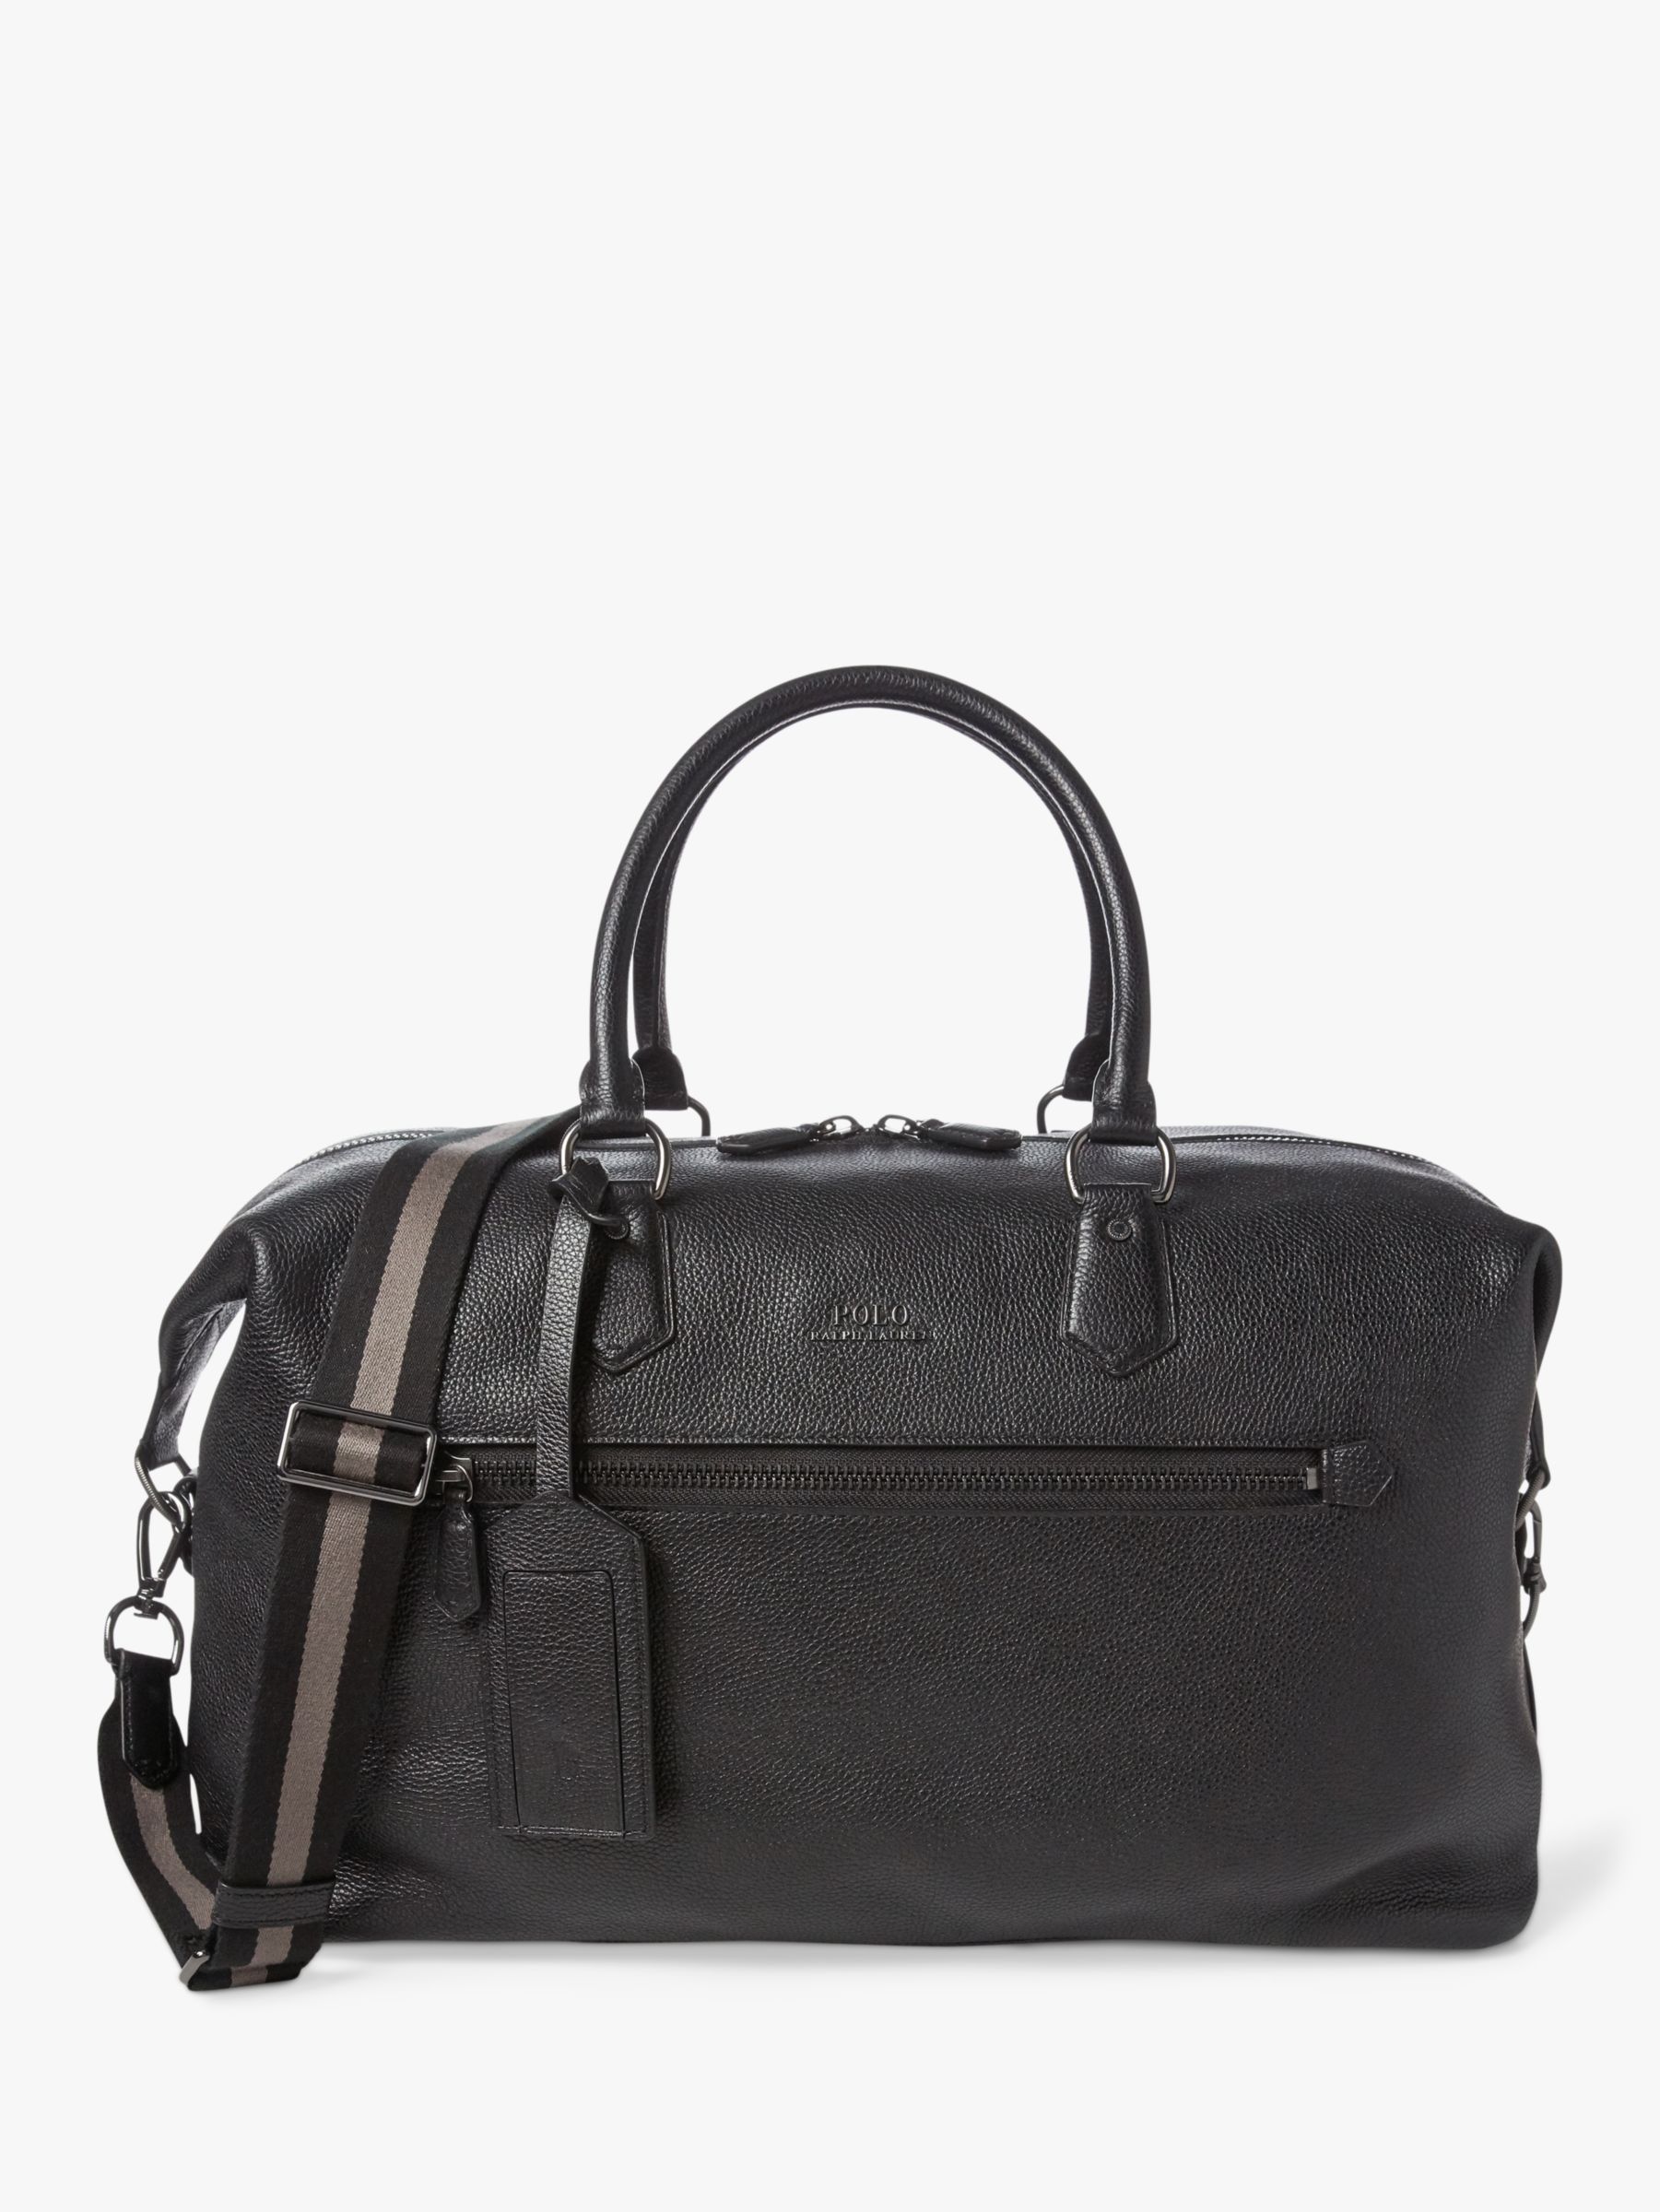 Polo Ralph Lauren Pebble Leather Duffle Bag at John Lewis & Partners